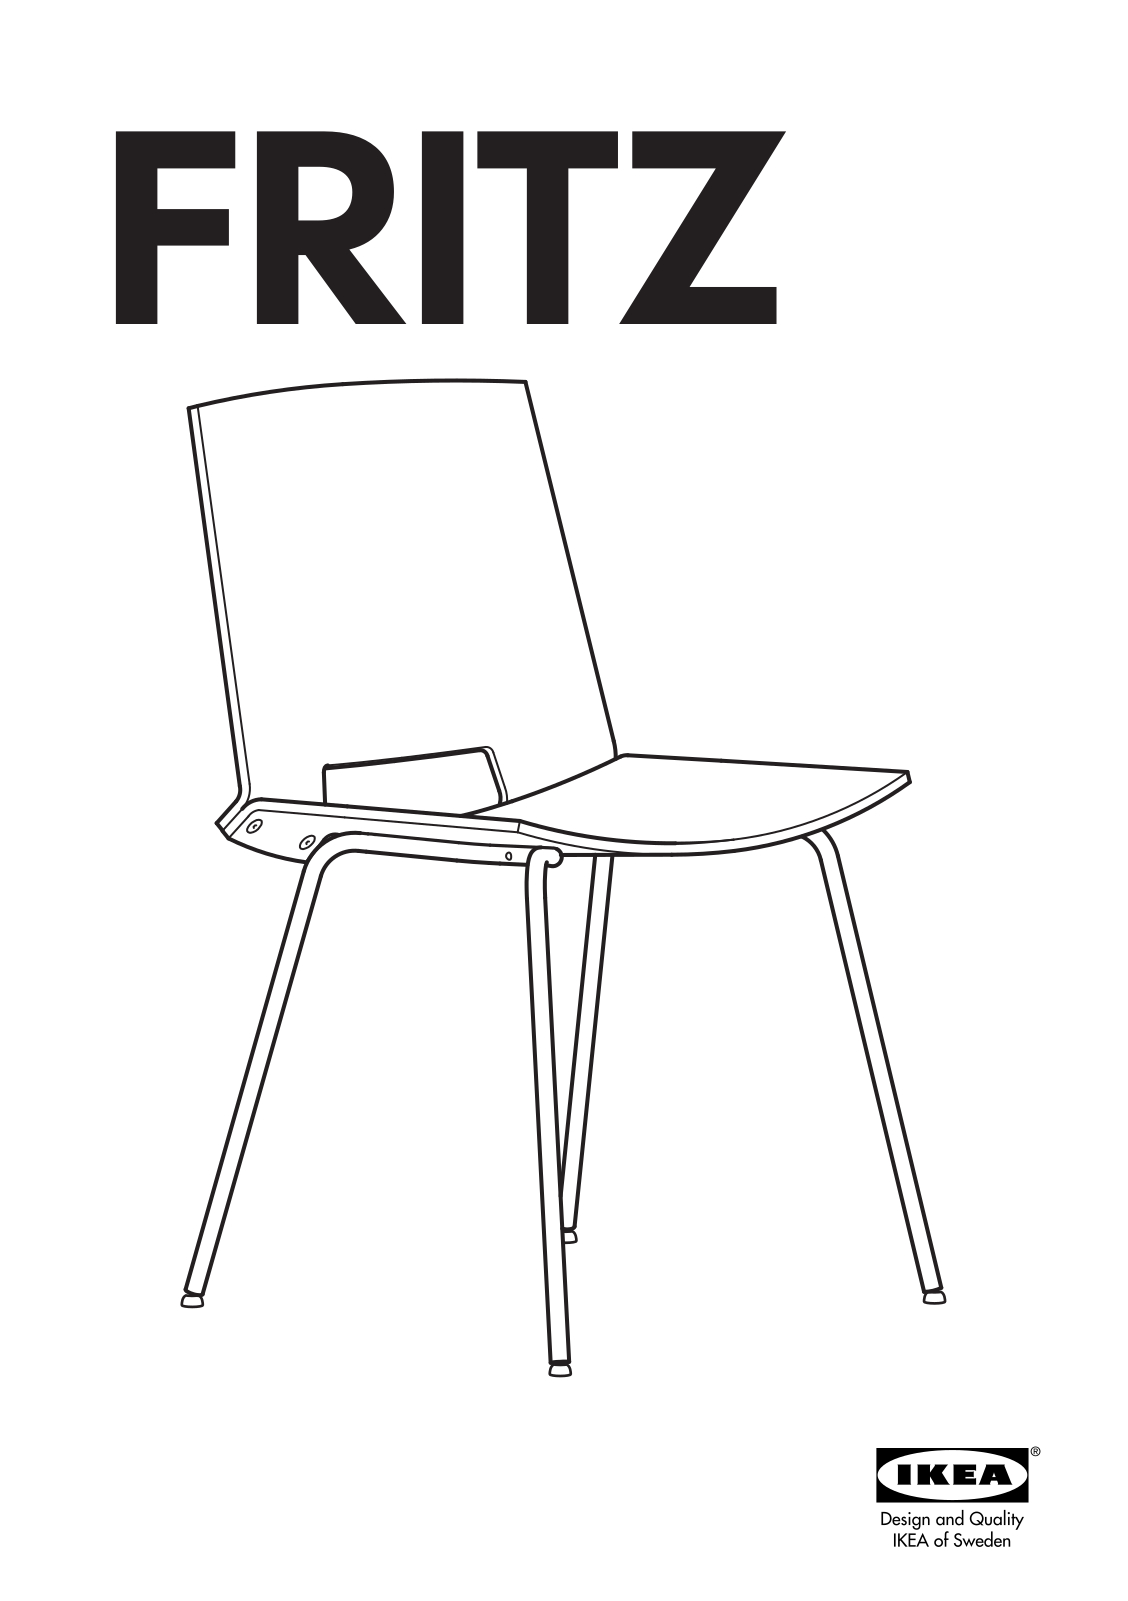 IKEA FRITZ CHAIR User Manual